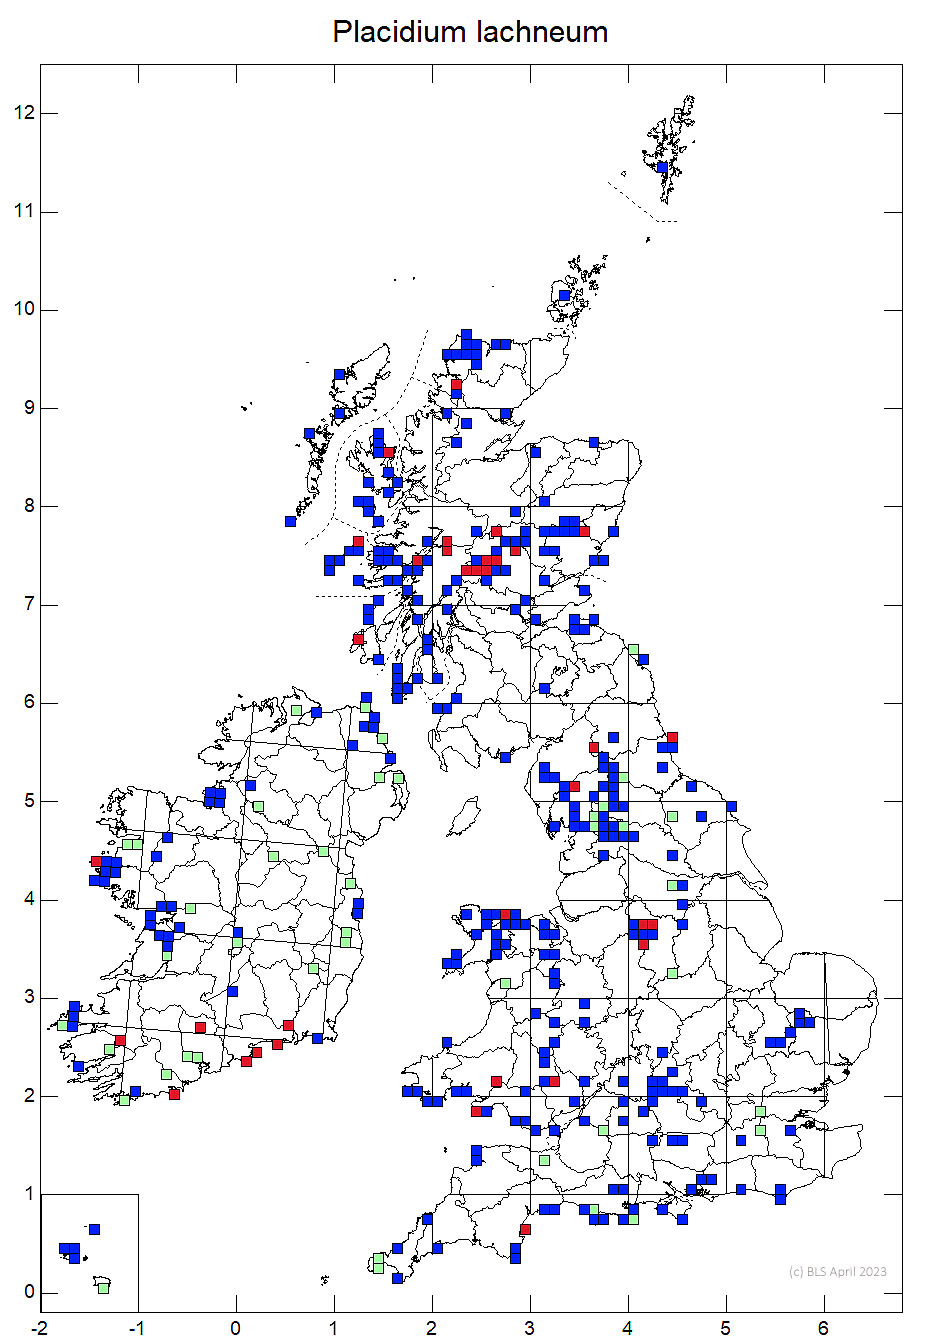 Placidium lachneum 10km sq distribution map